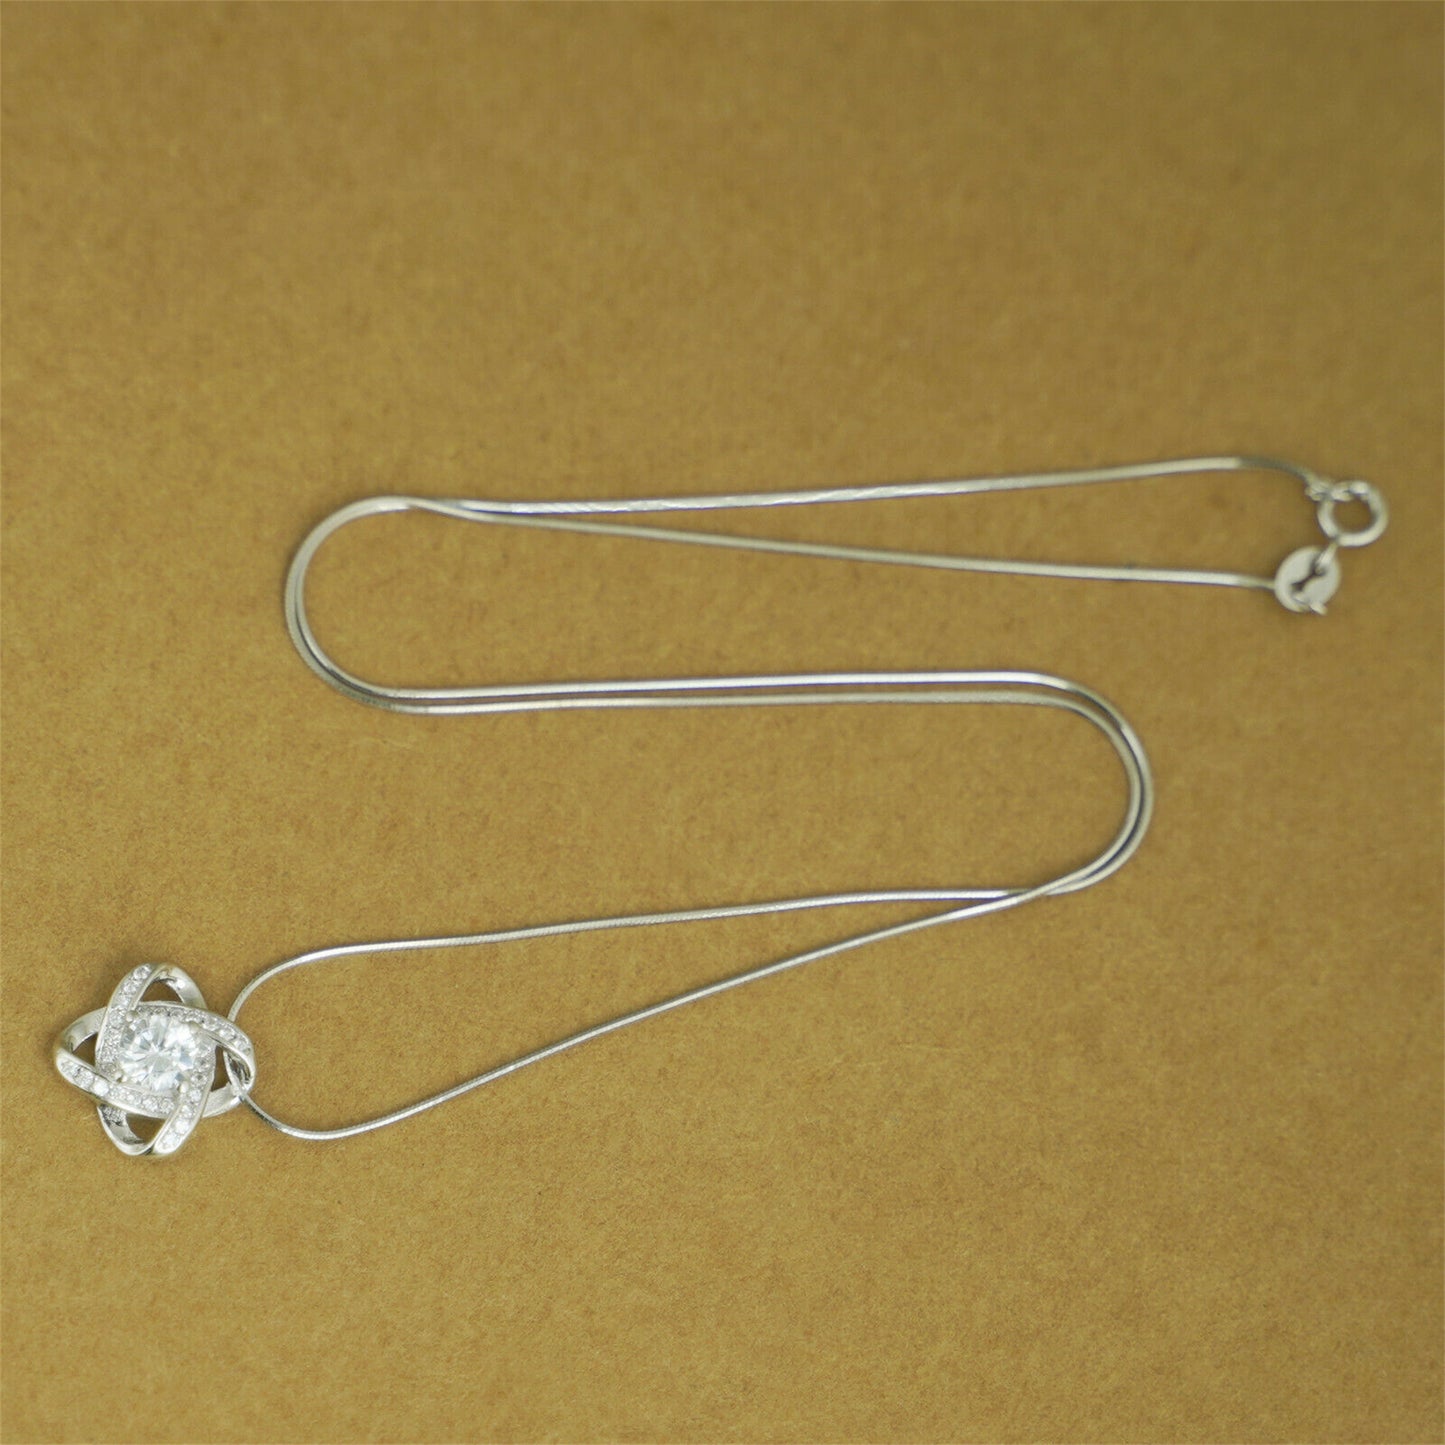 Sterling Silver 14mm Halo CZ Knot Flower Pendant Necklace Rhodium / Rose Gold - sugarkittenlondon